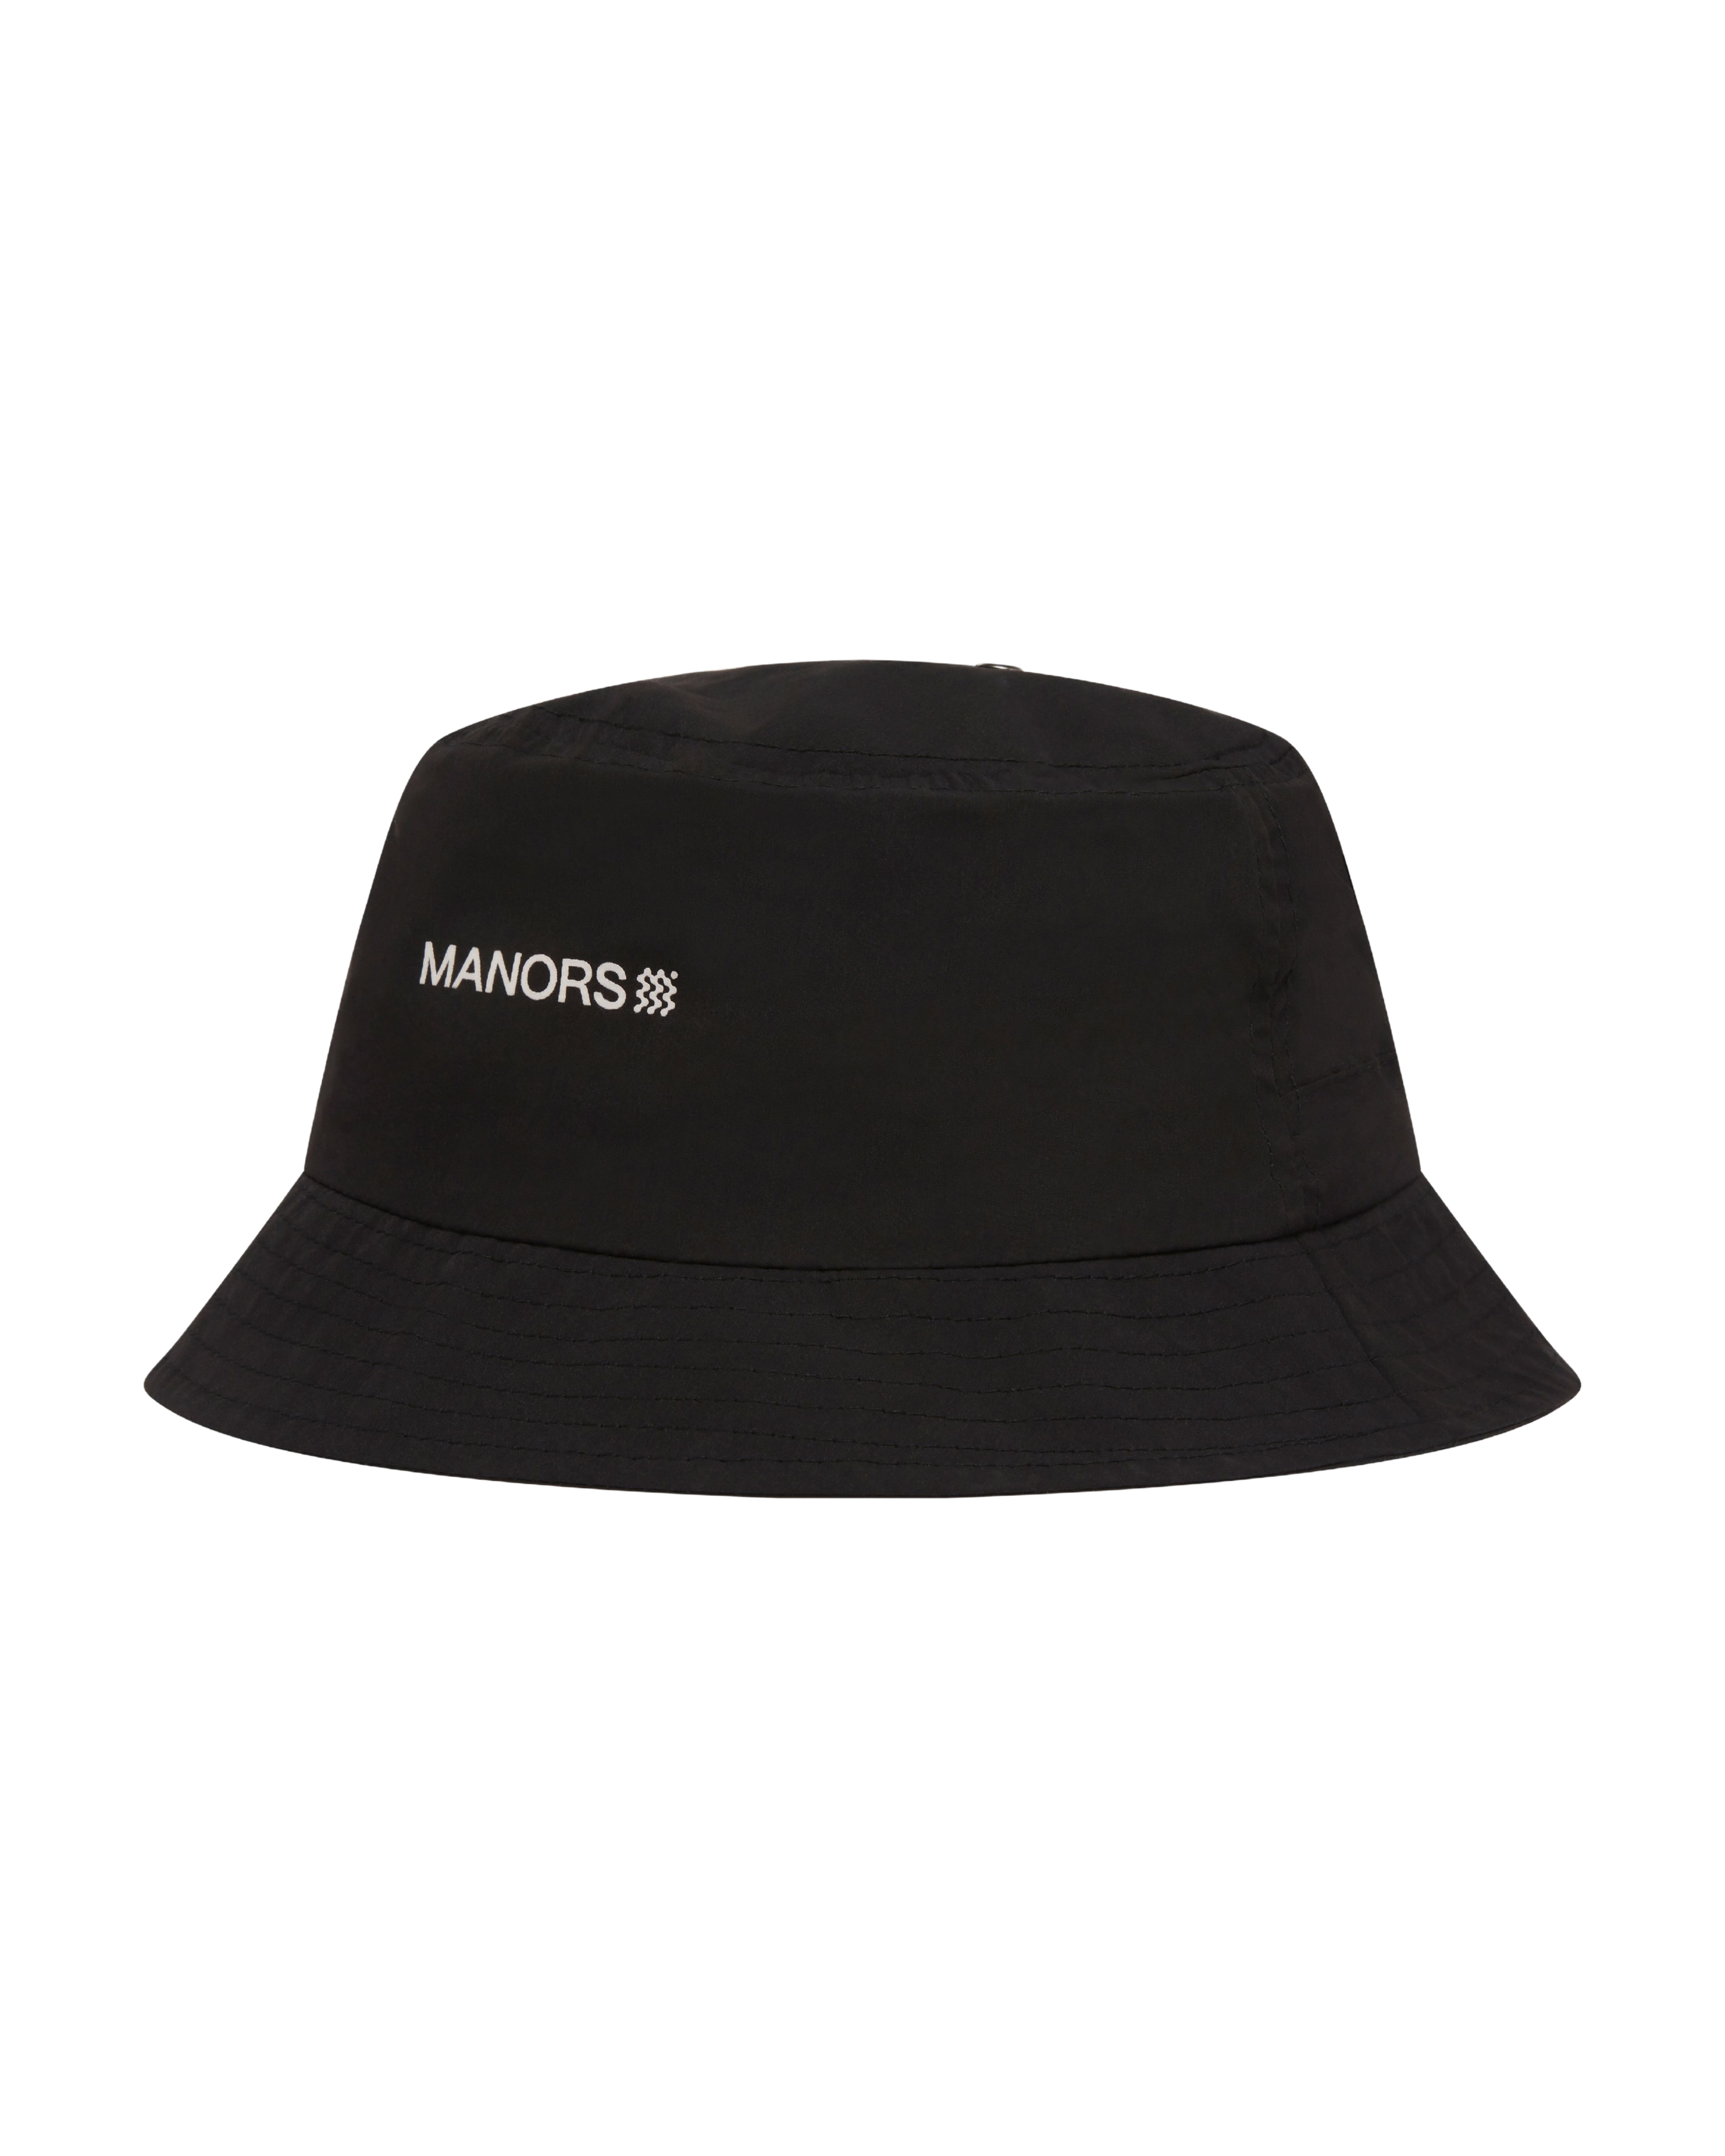 MANORS Ranger Bucket Hat Black | golf and sports fashion brands at agorabkk 